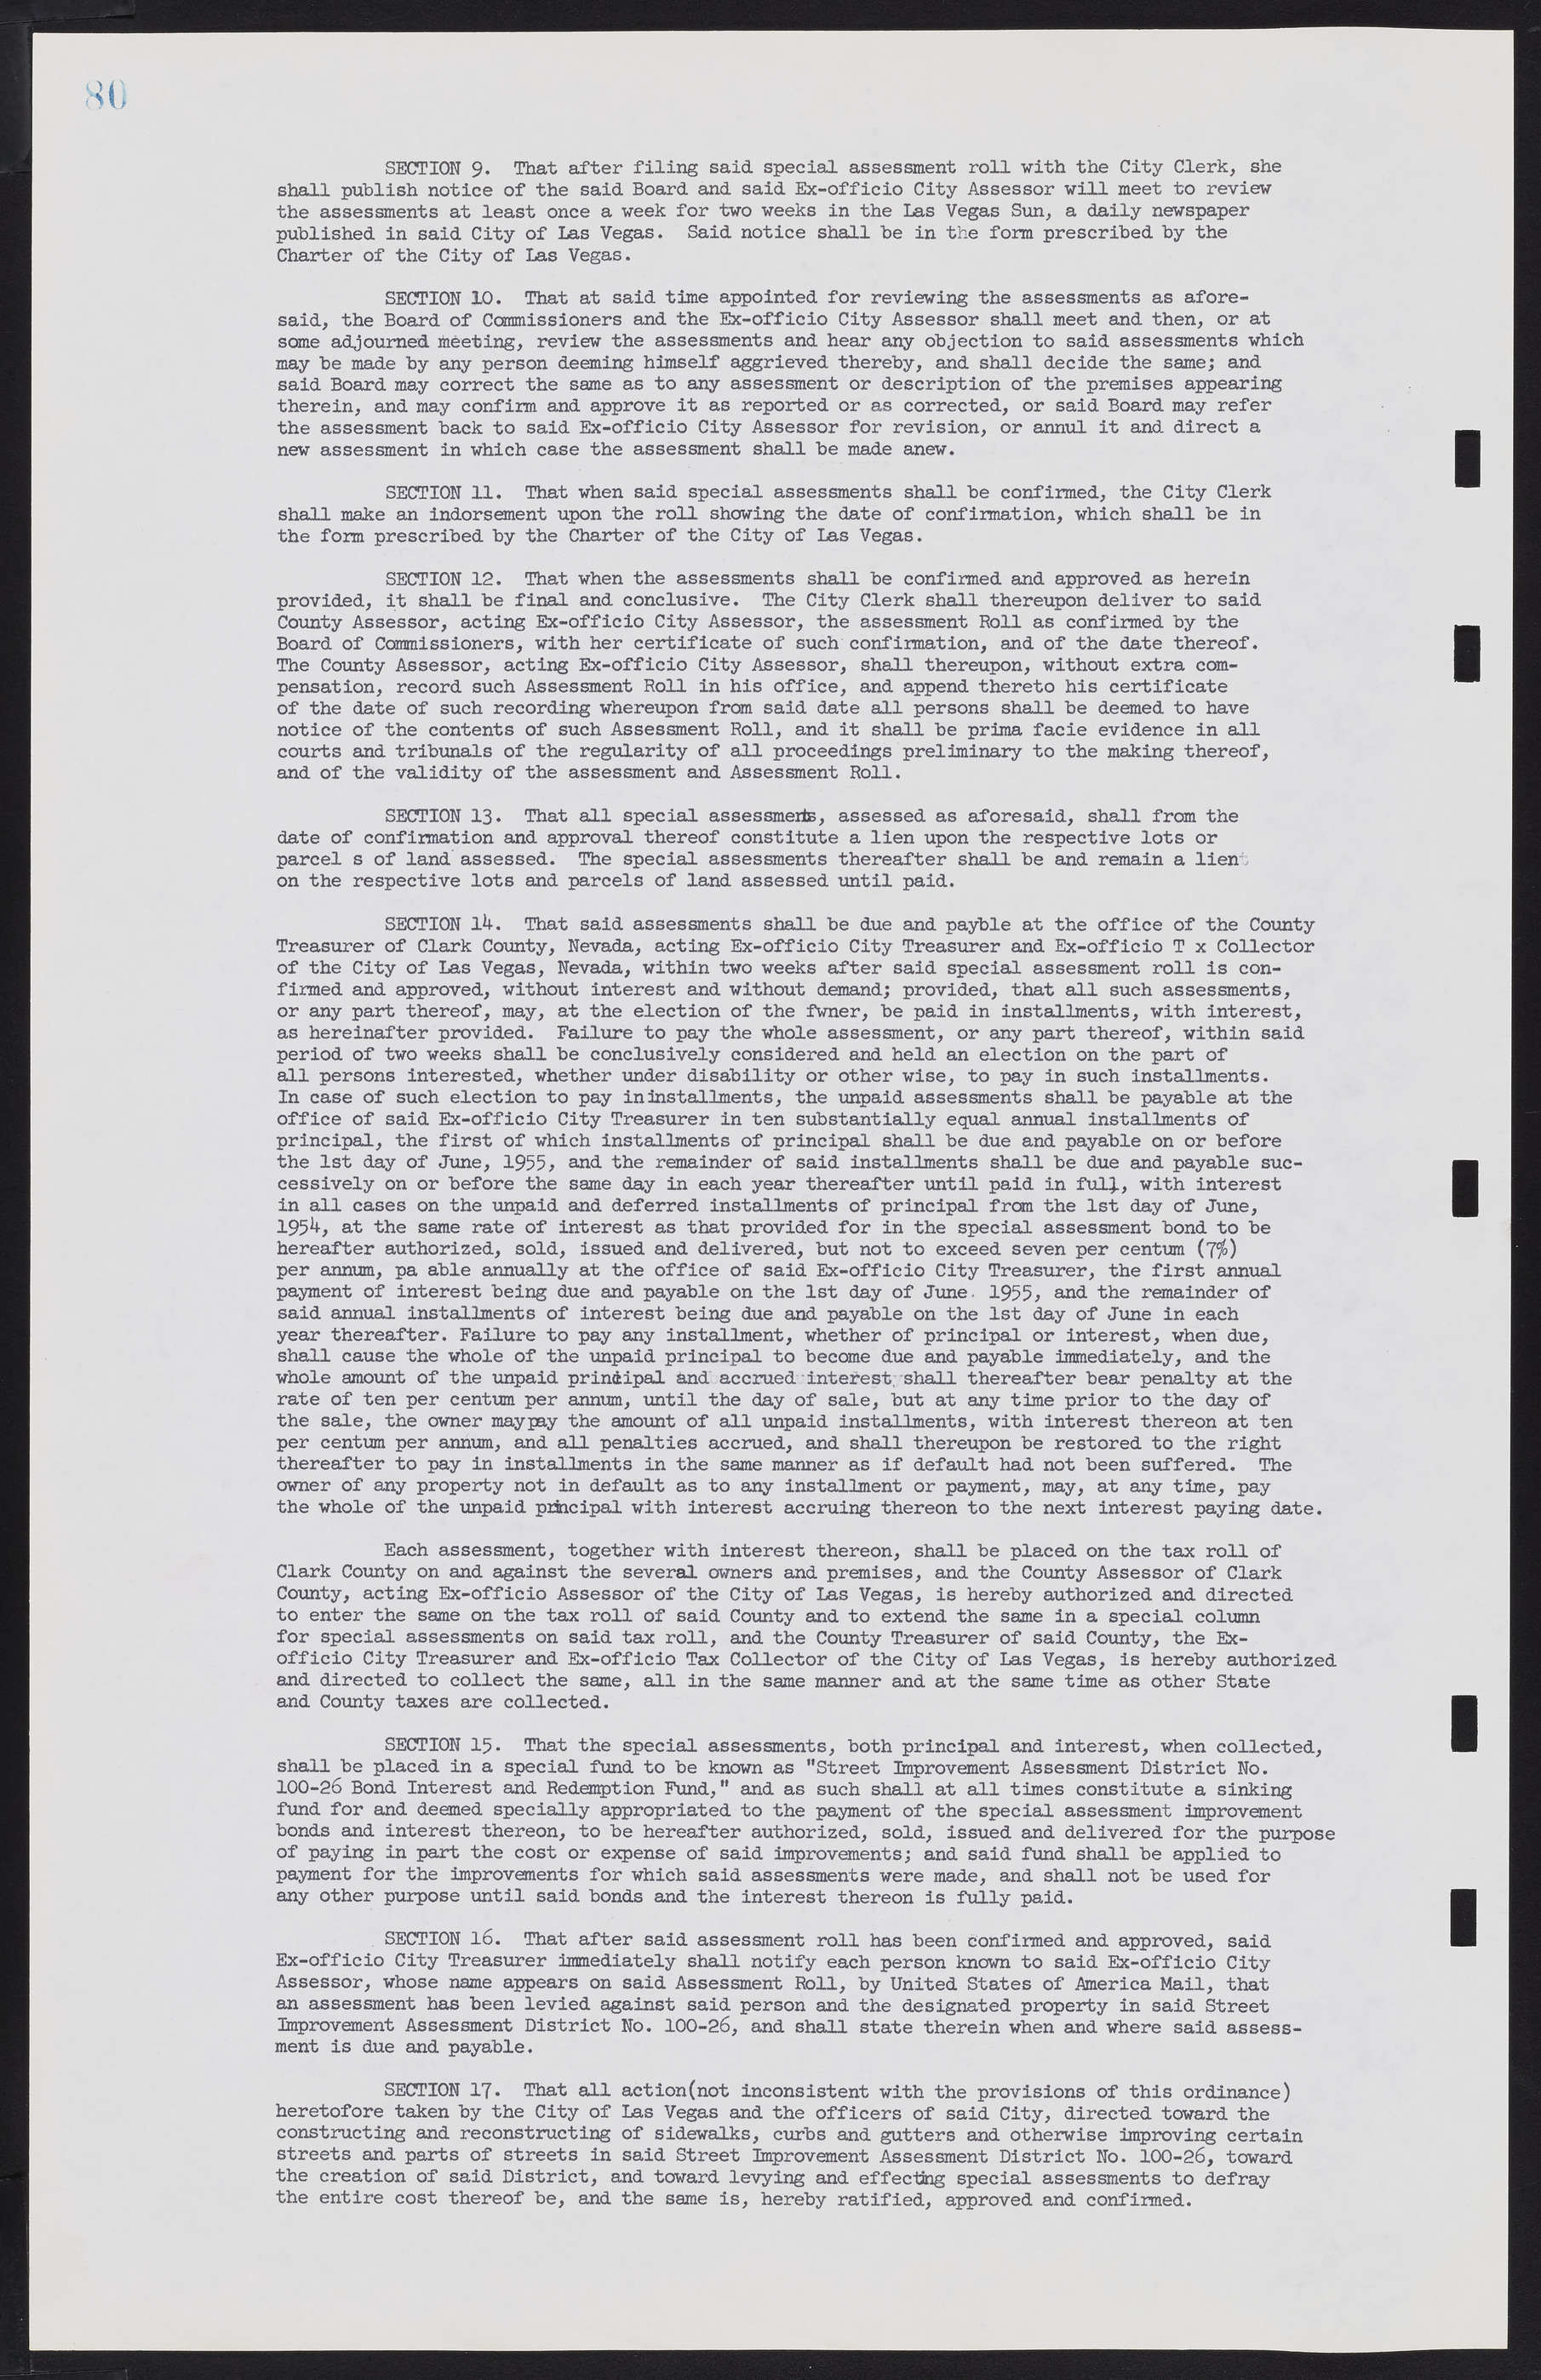 Las Vegas City Commission Minutes, February 17, 1954 to September 21, 1955, lvc000009-84